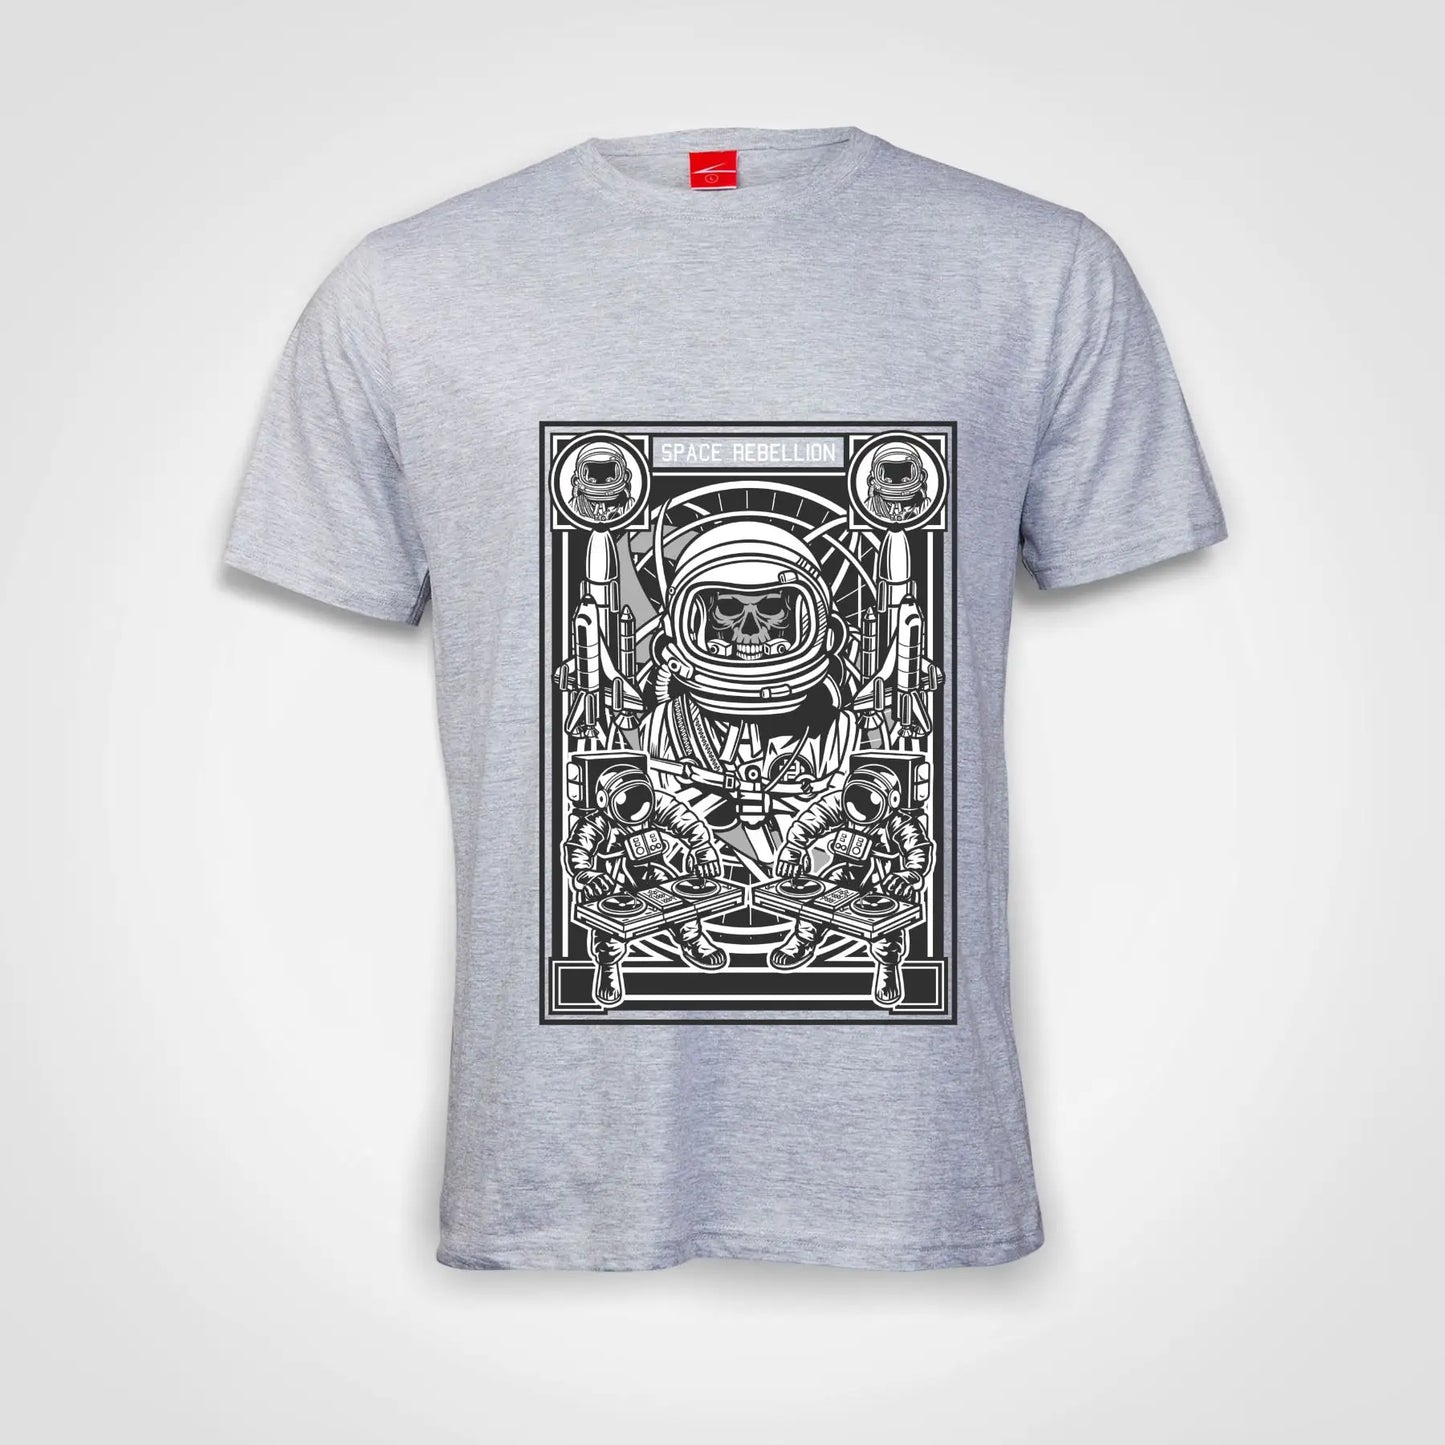 Astronaut Skull Space Rebellion Cotton T-Shirt Grey-Melange IZZIT APPAREL